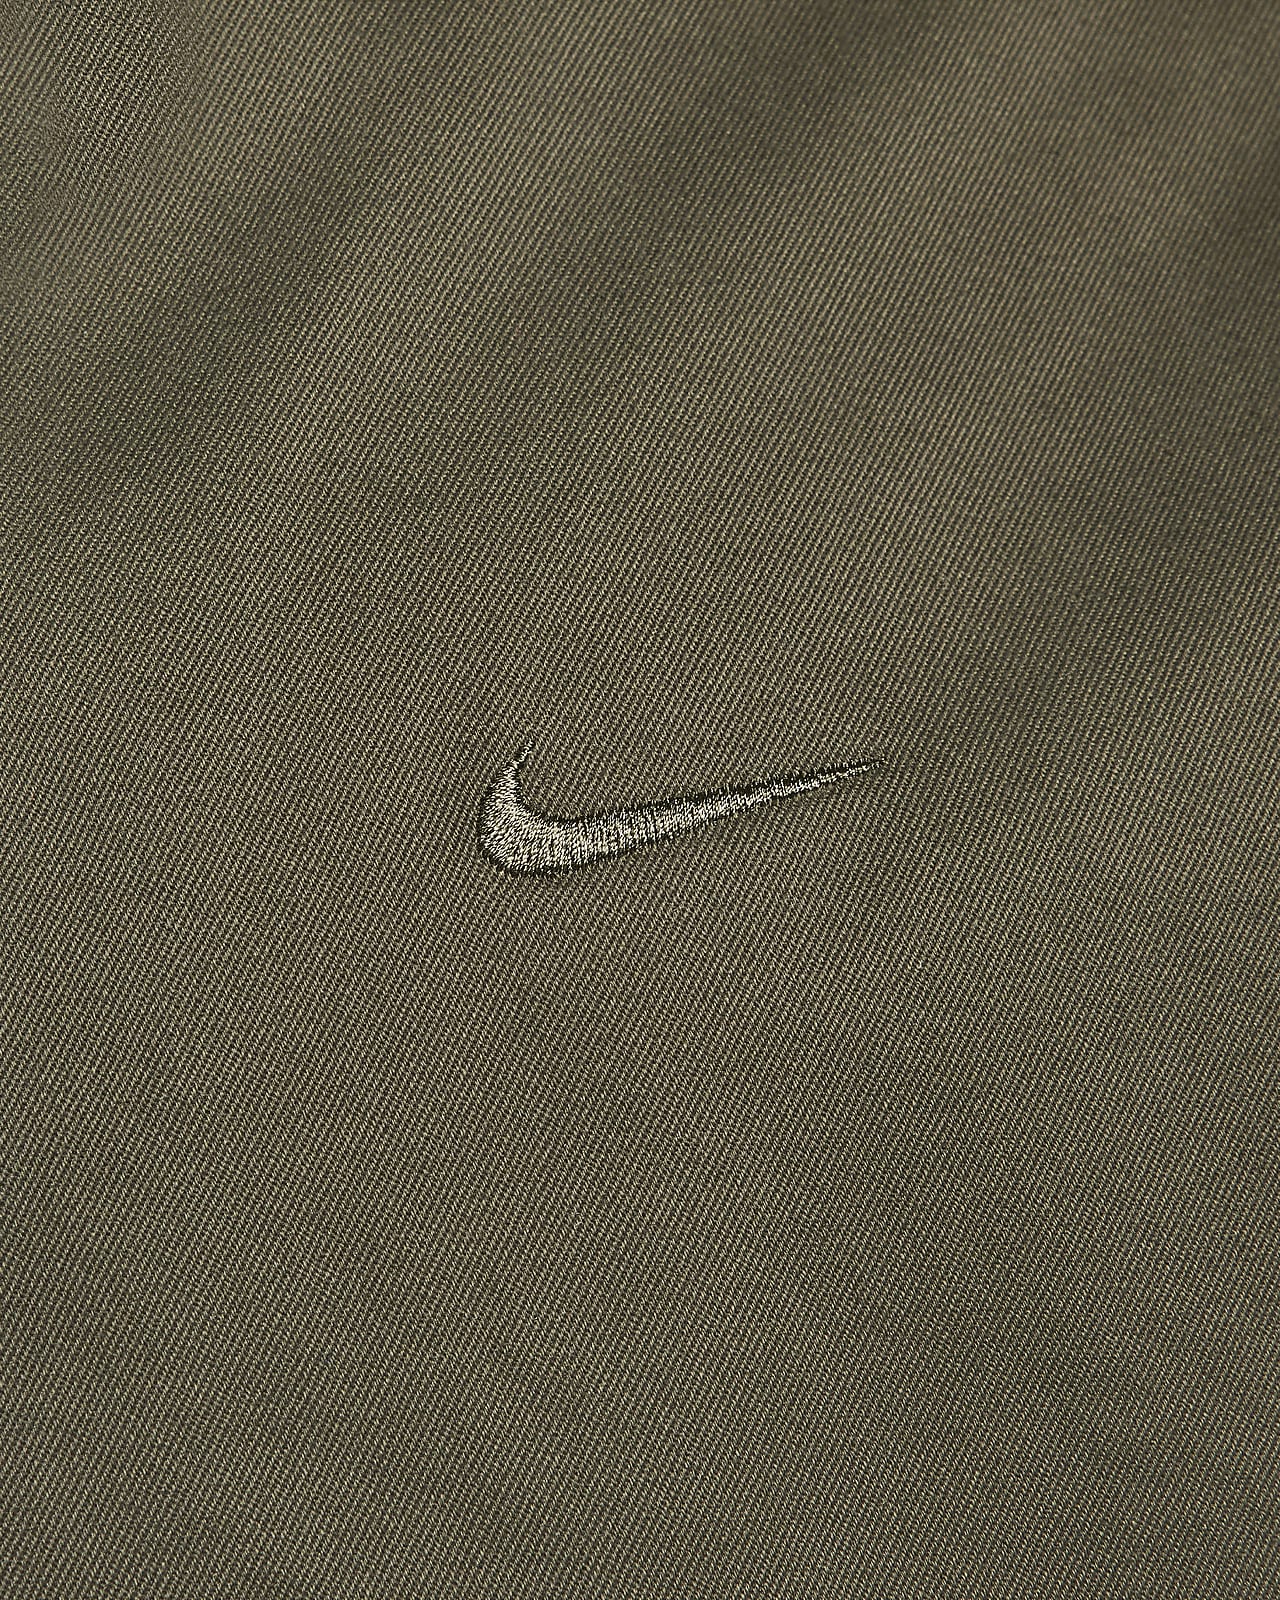 Nike Life Men's Woven Harrington Jacket